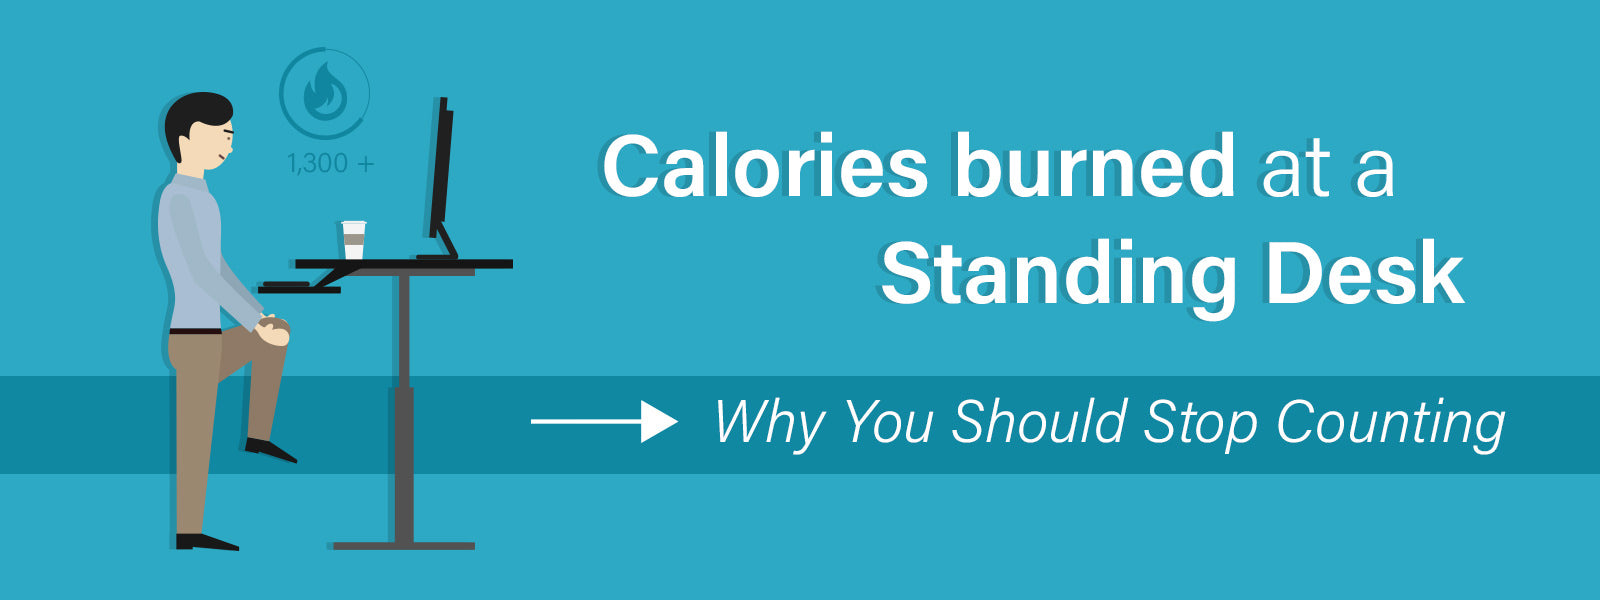 Standing Desk Calories Burned